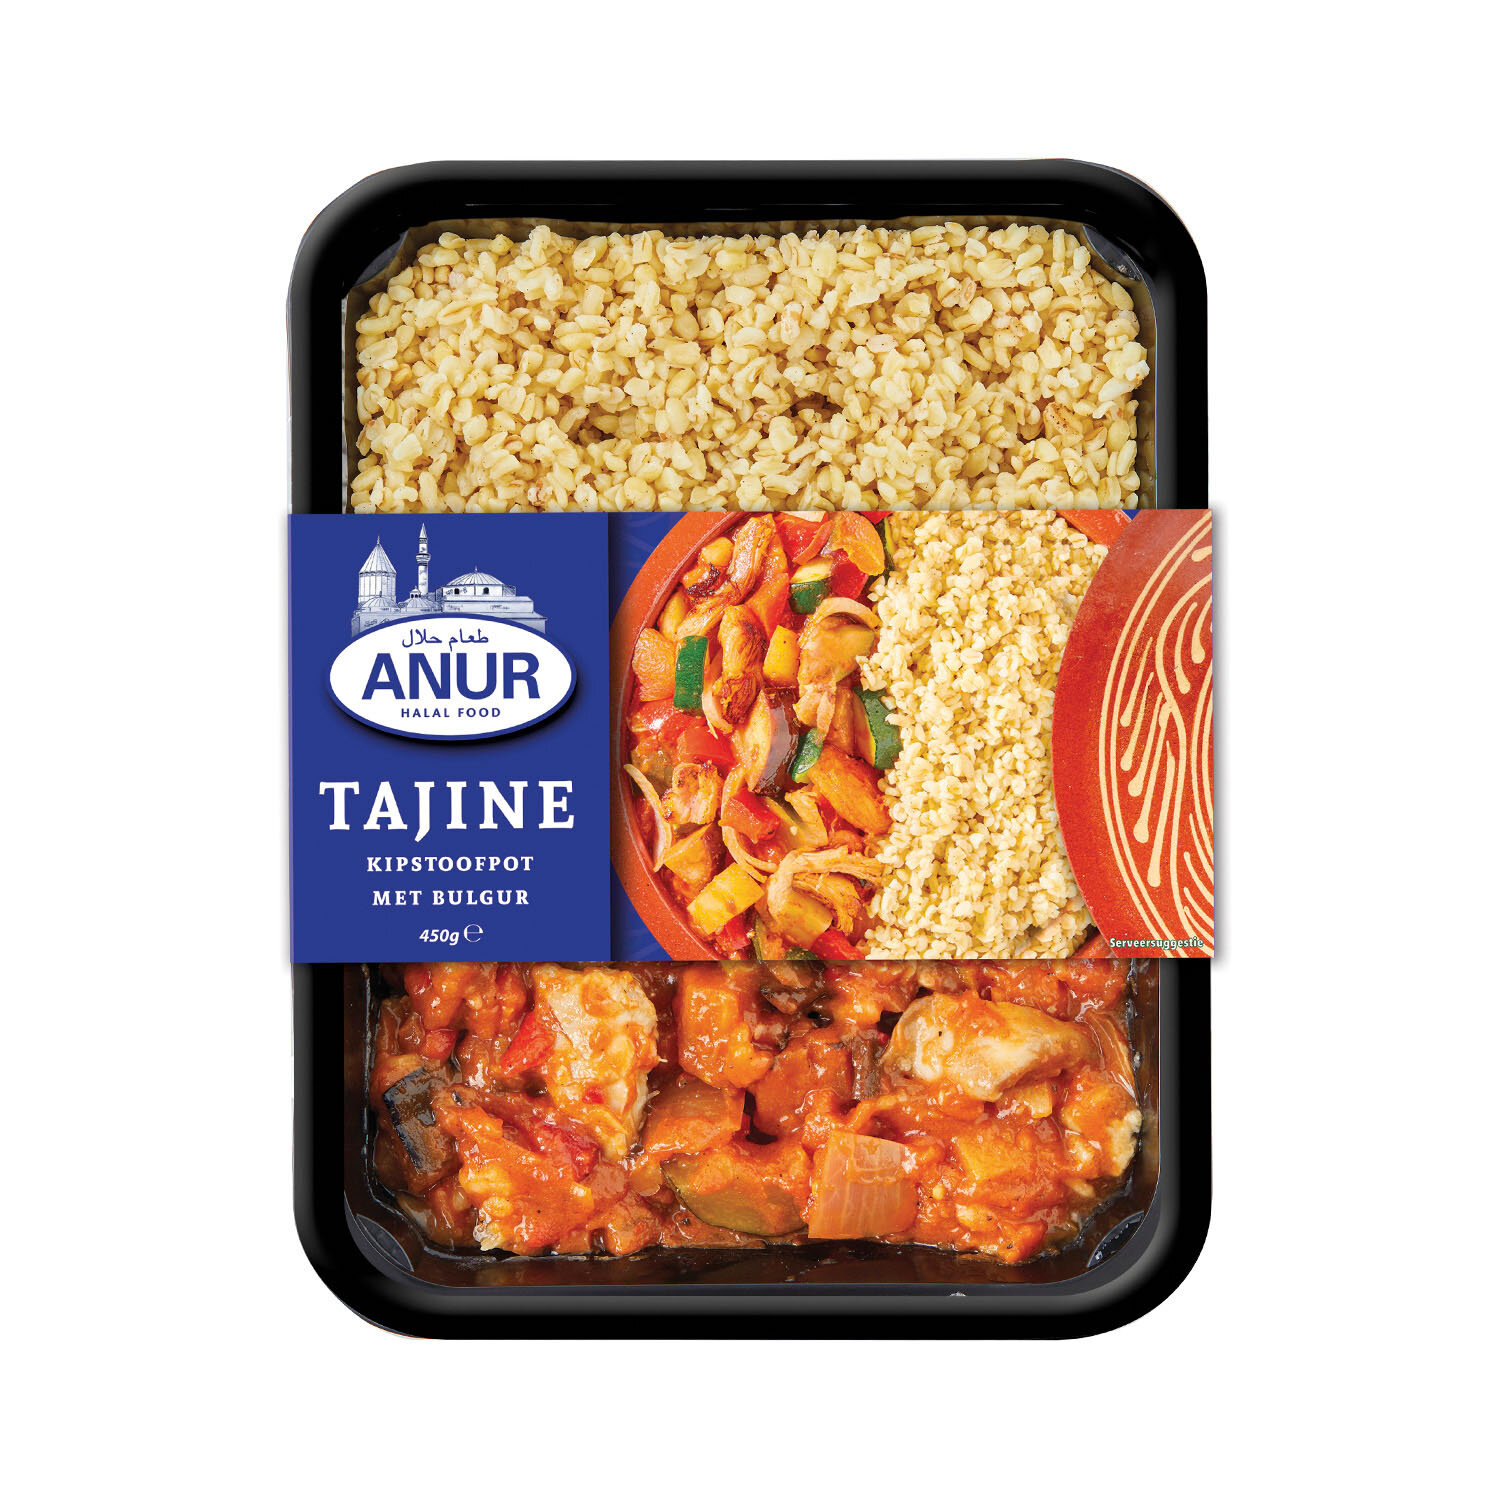 Tajine - Kipstoofpot met bulgur - ANUR Halal Food 